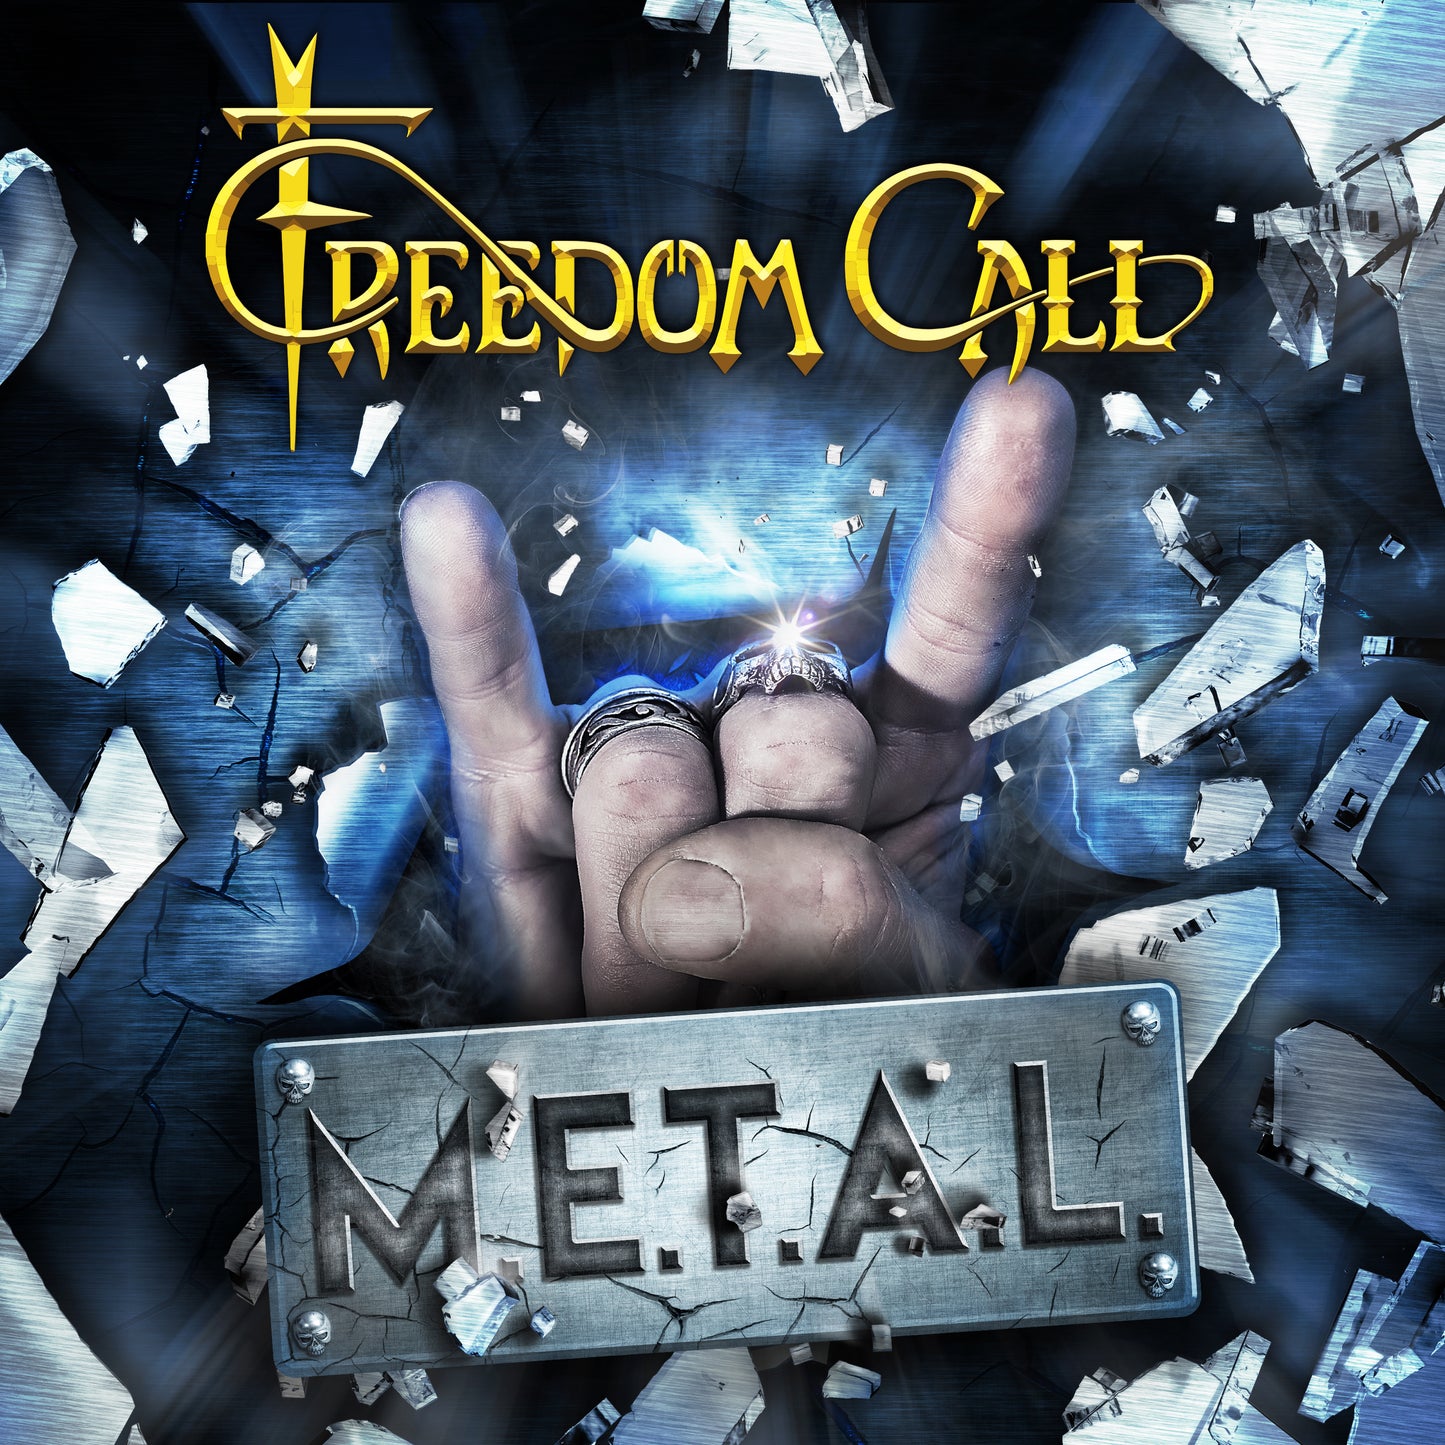 Freedom Call "M.E.T.A.L." CD